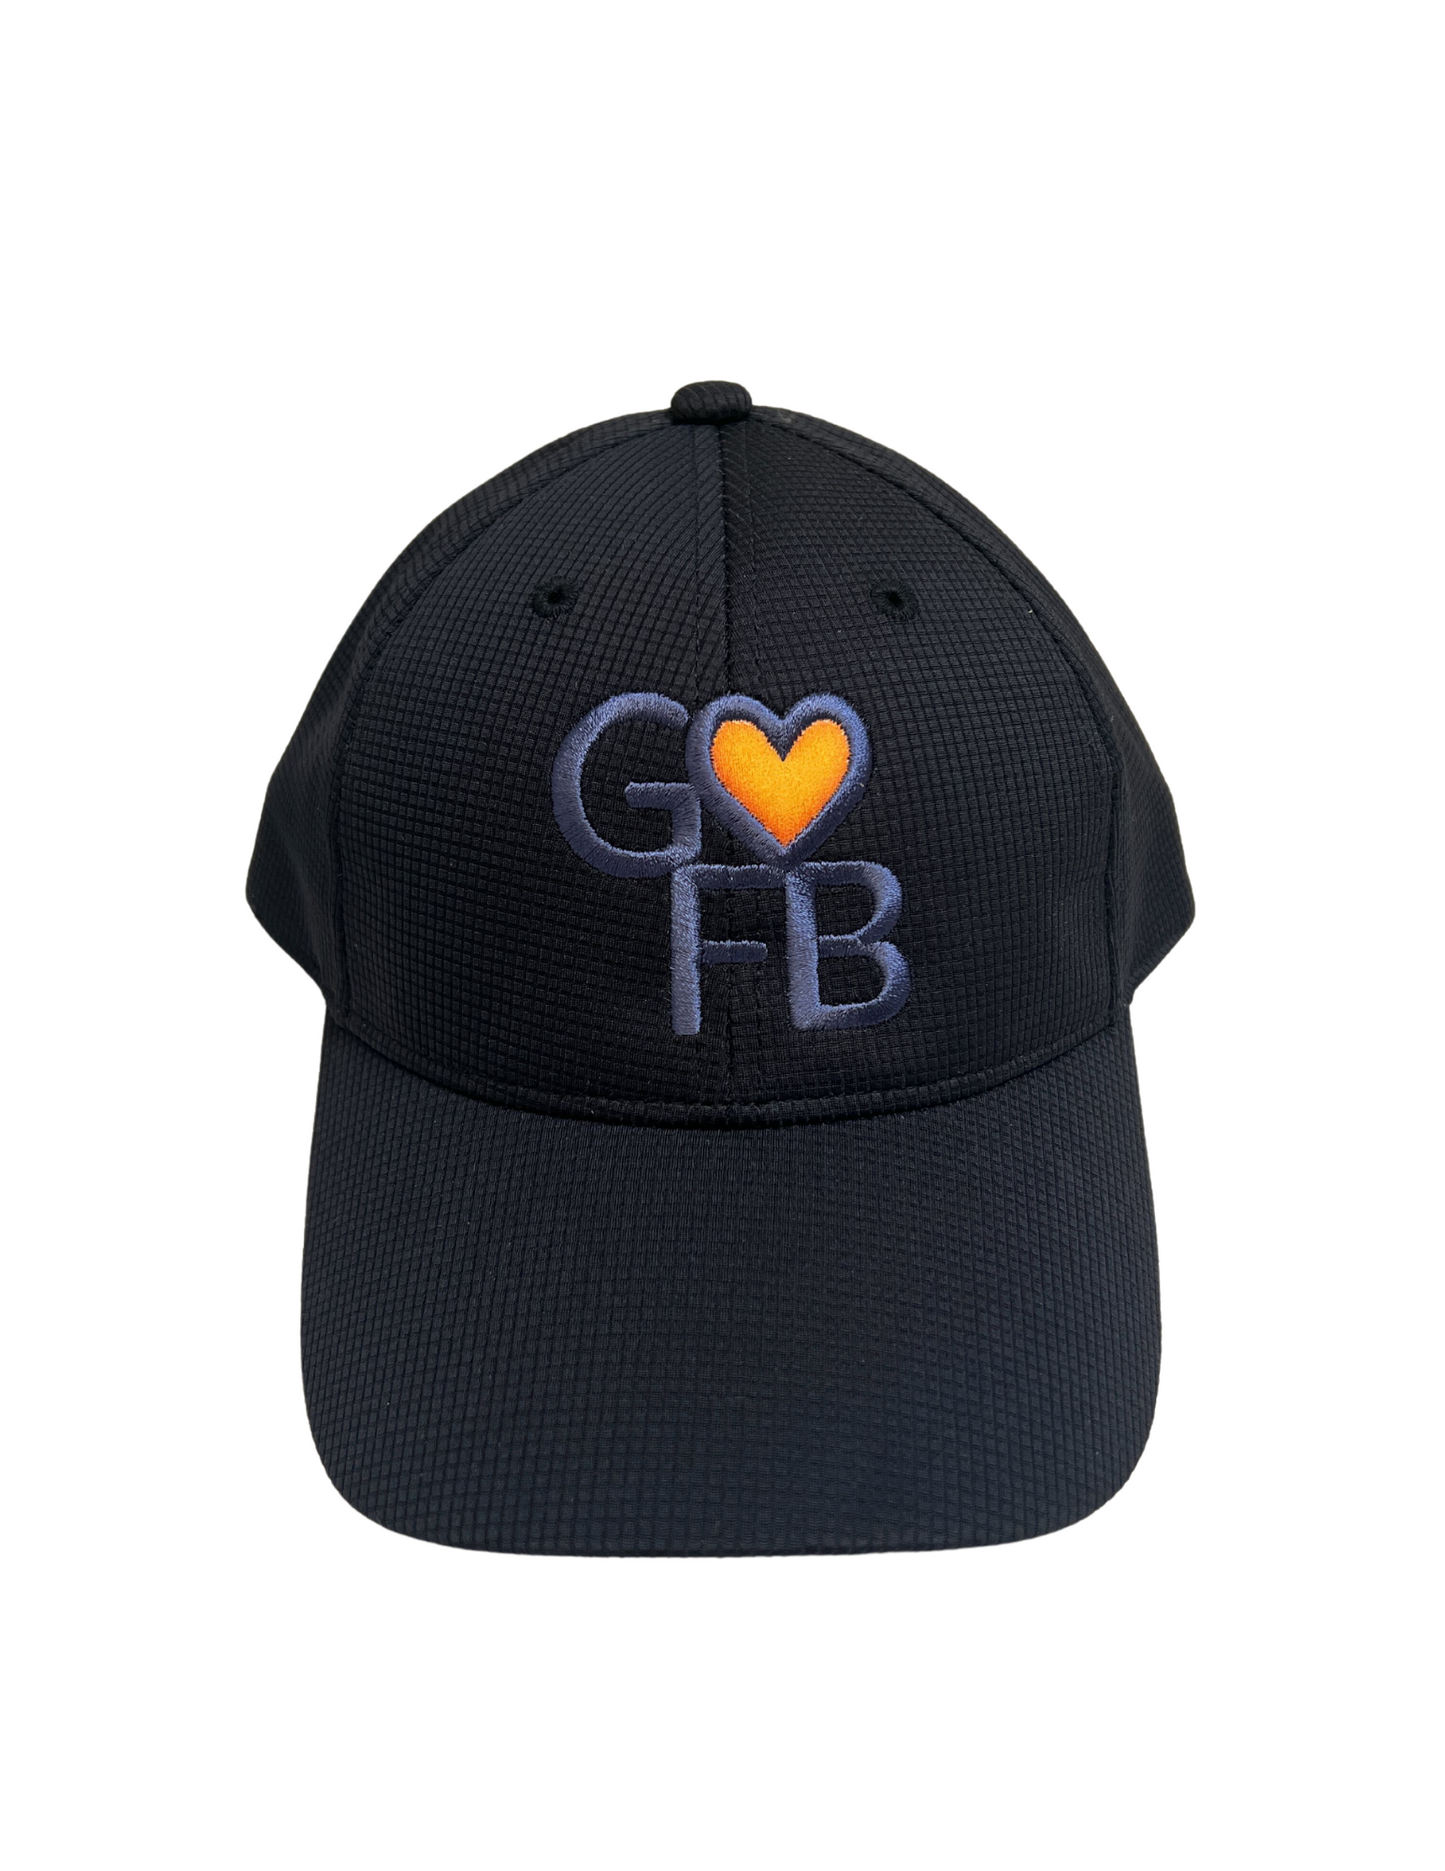 GVFB Logo Baseball Cap